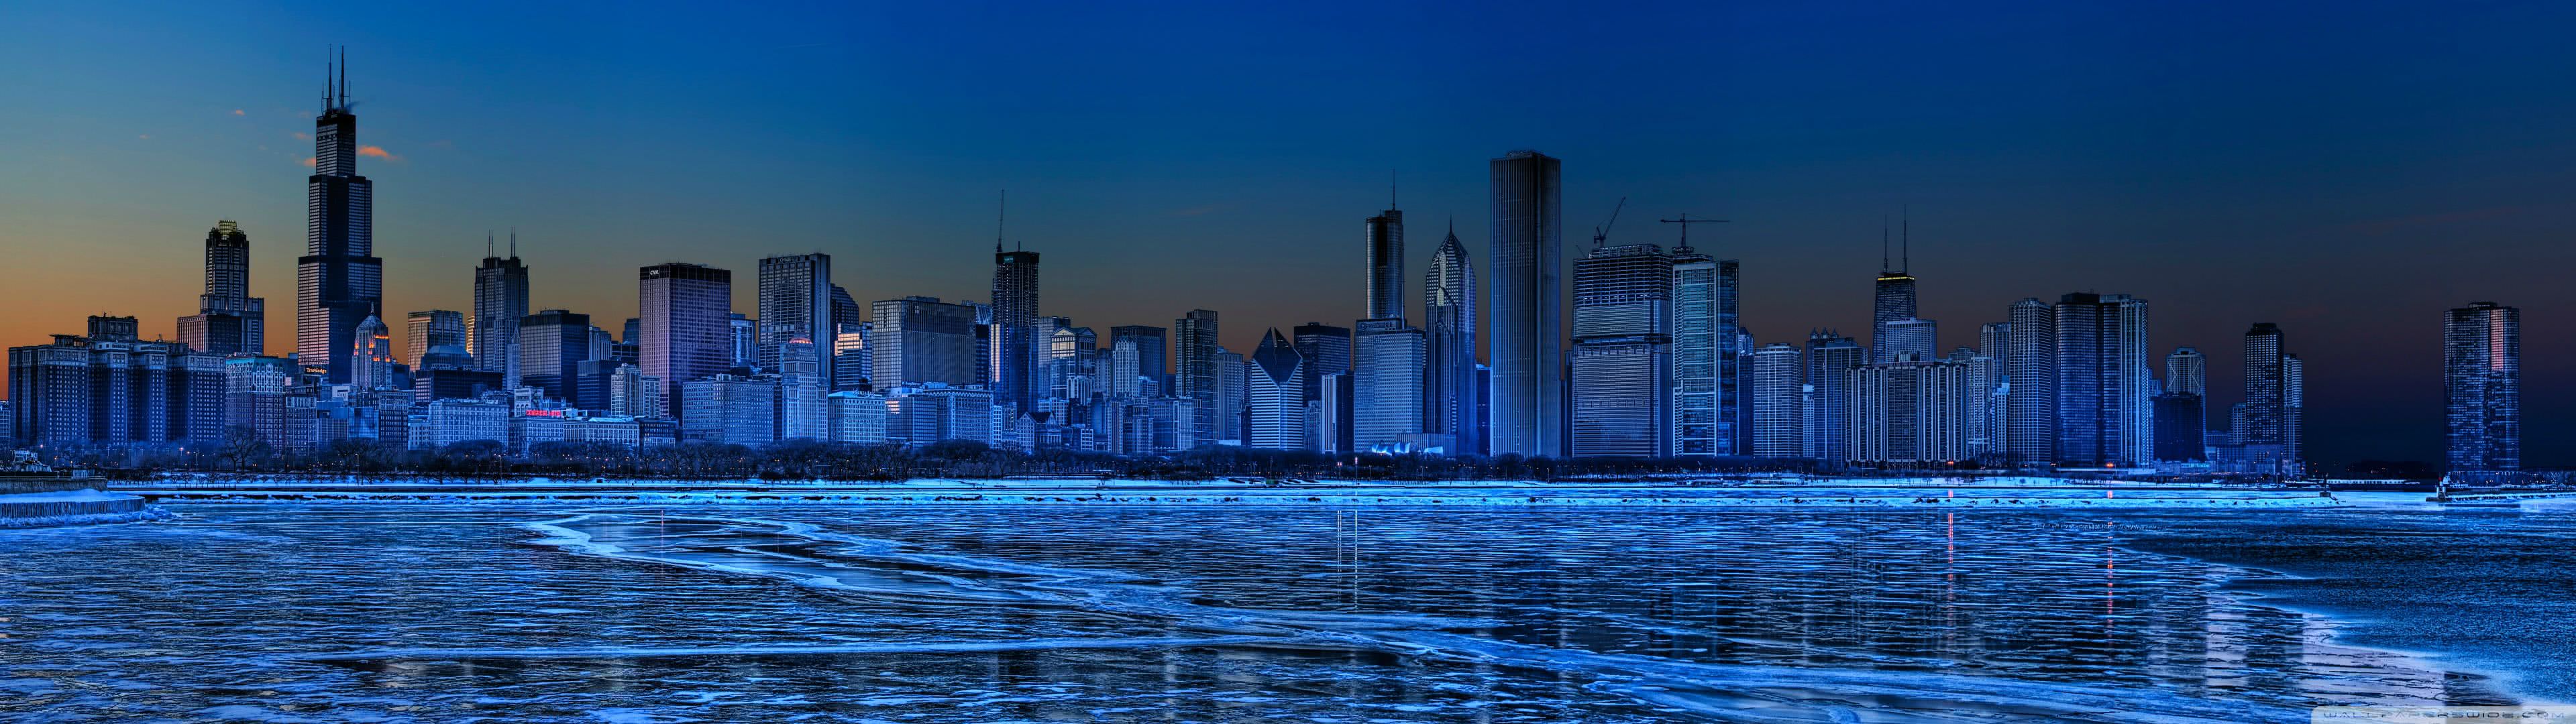 Chicago Skyline Dual Monitor Wallpaper Cc